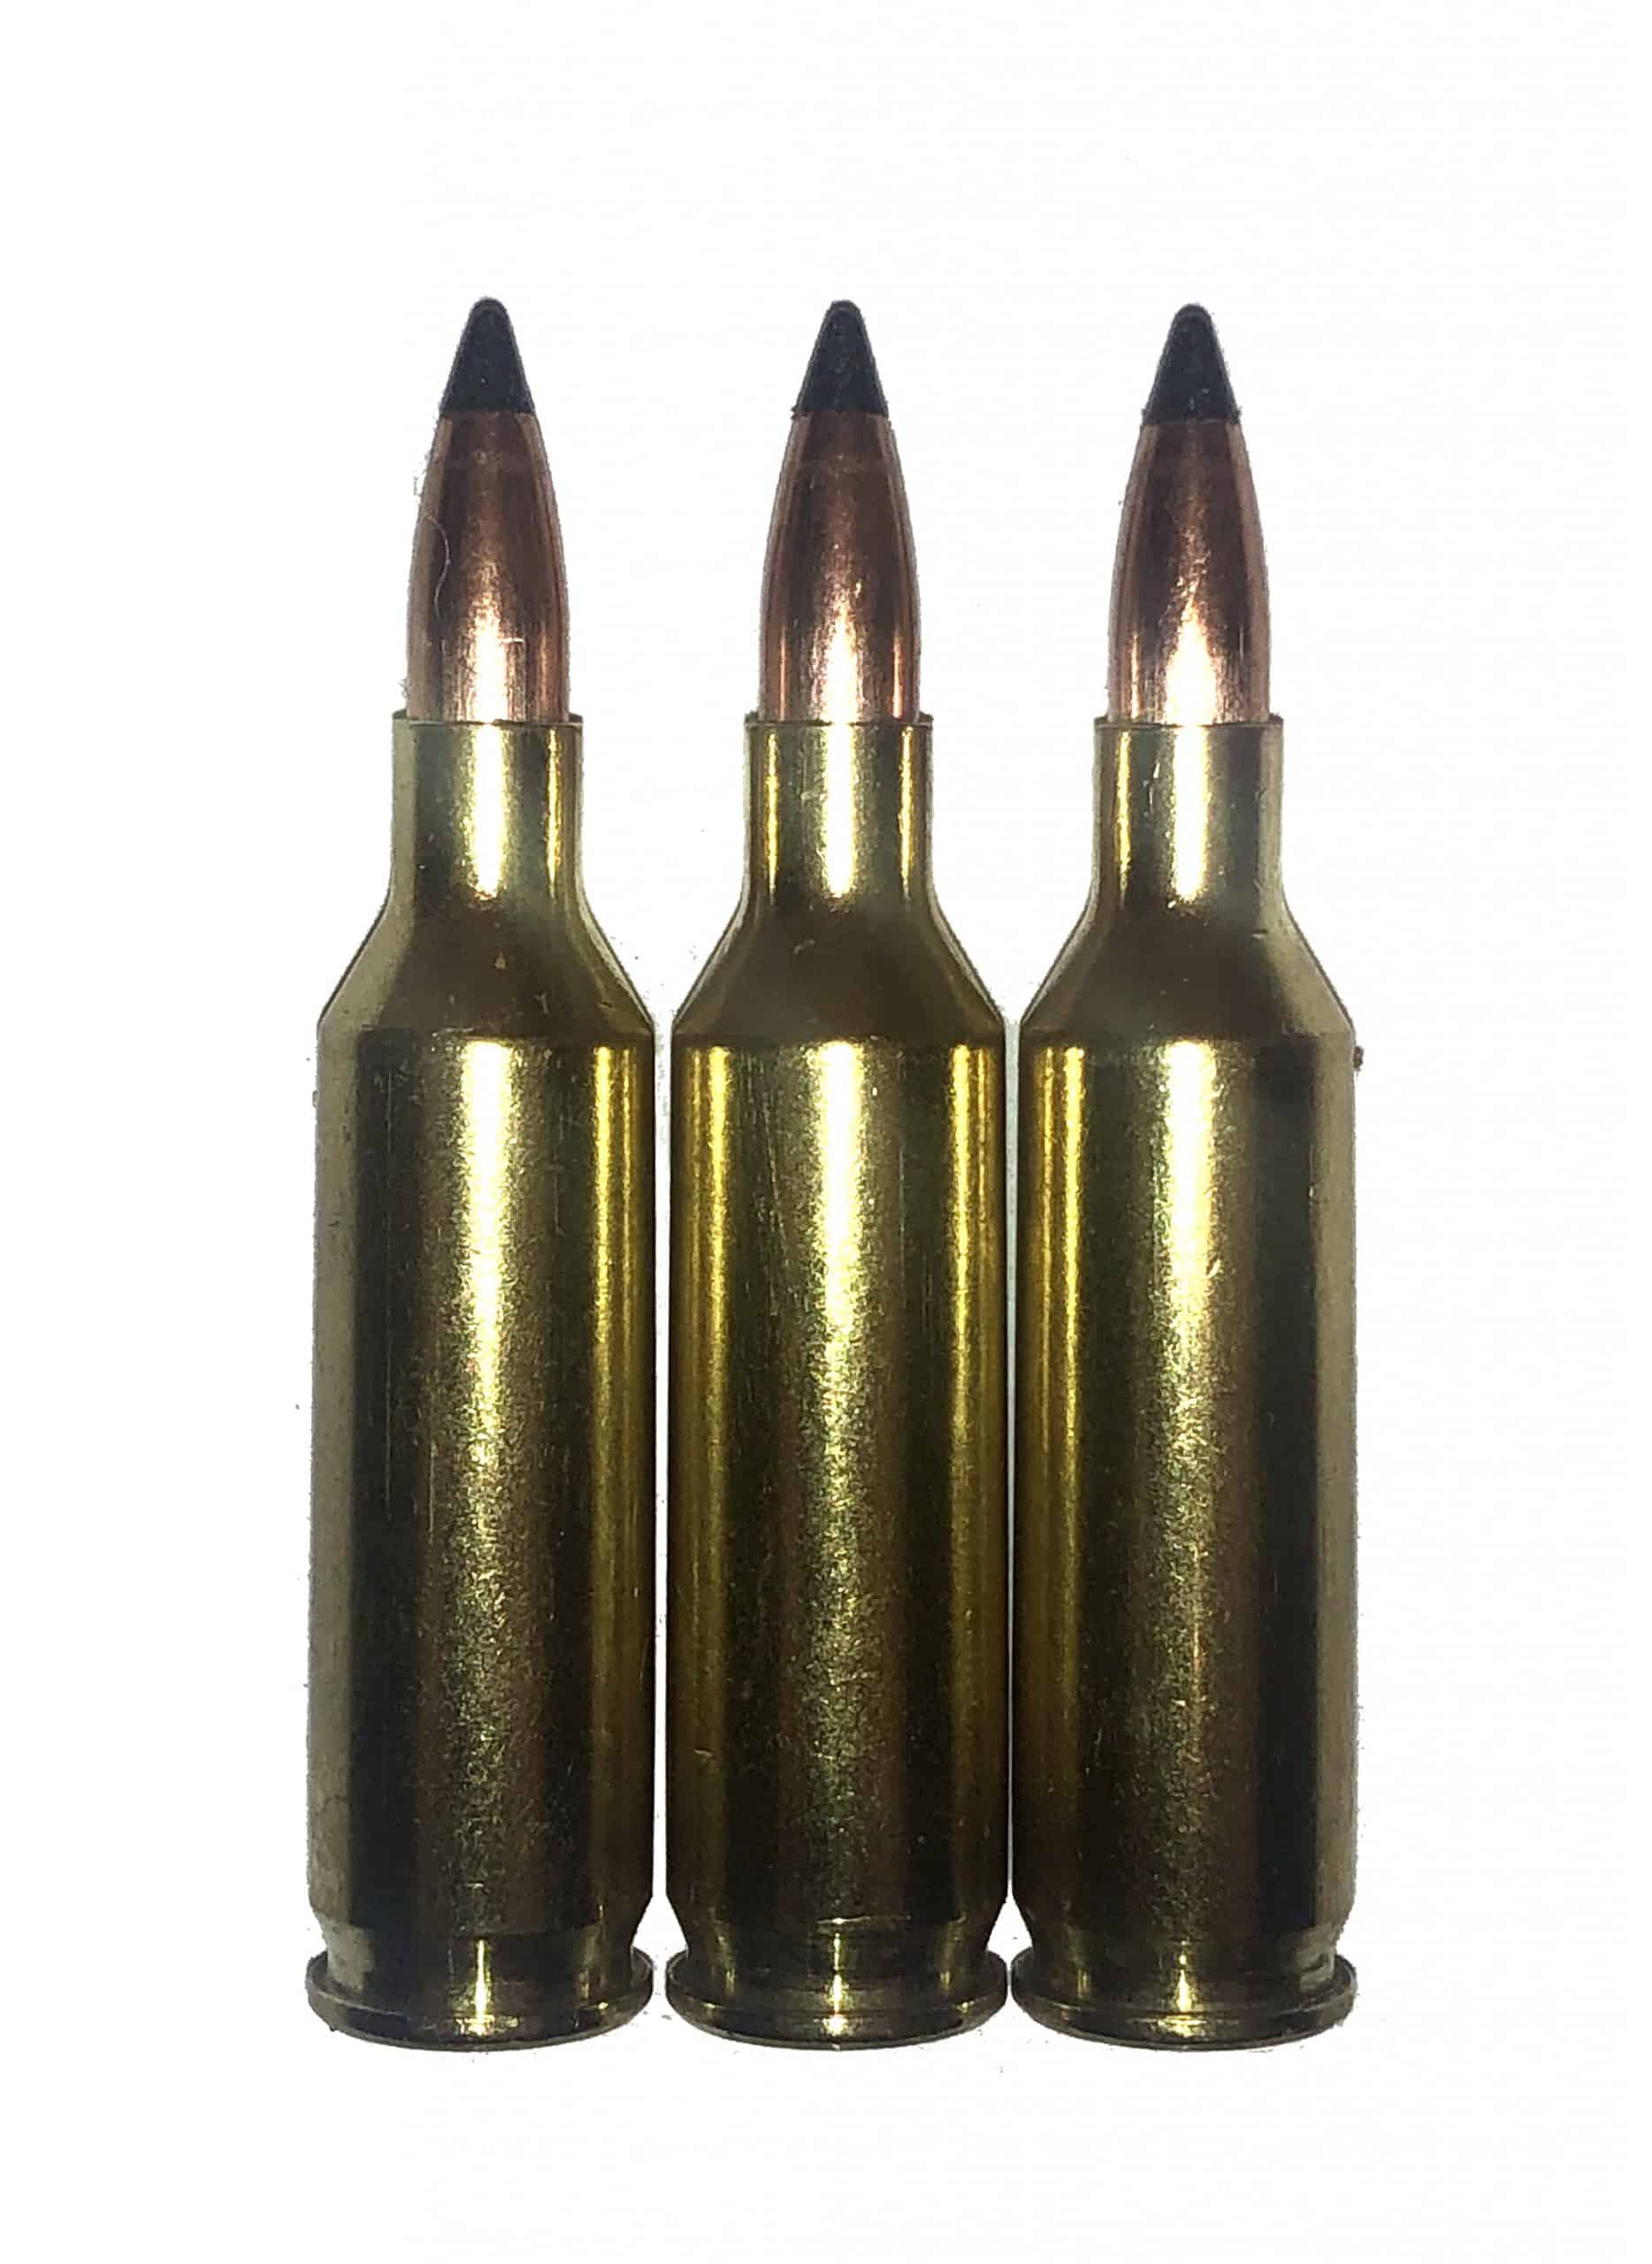 .17 Remington Fireball Dummy Cartridges Rounds Snap Caps Fake Bullets J&M Spec INERT